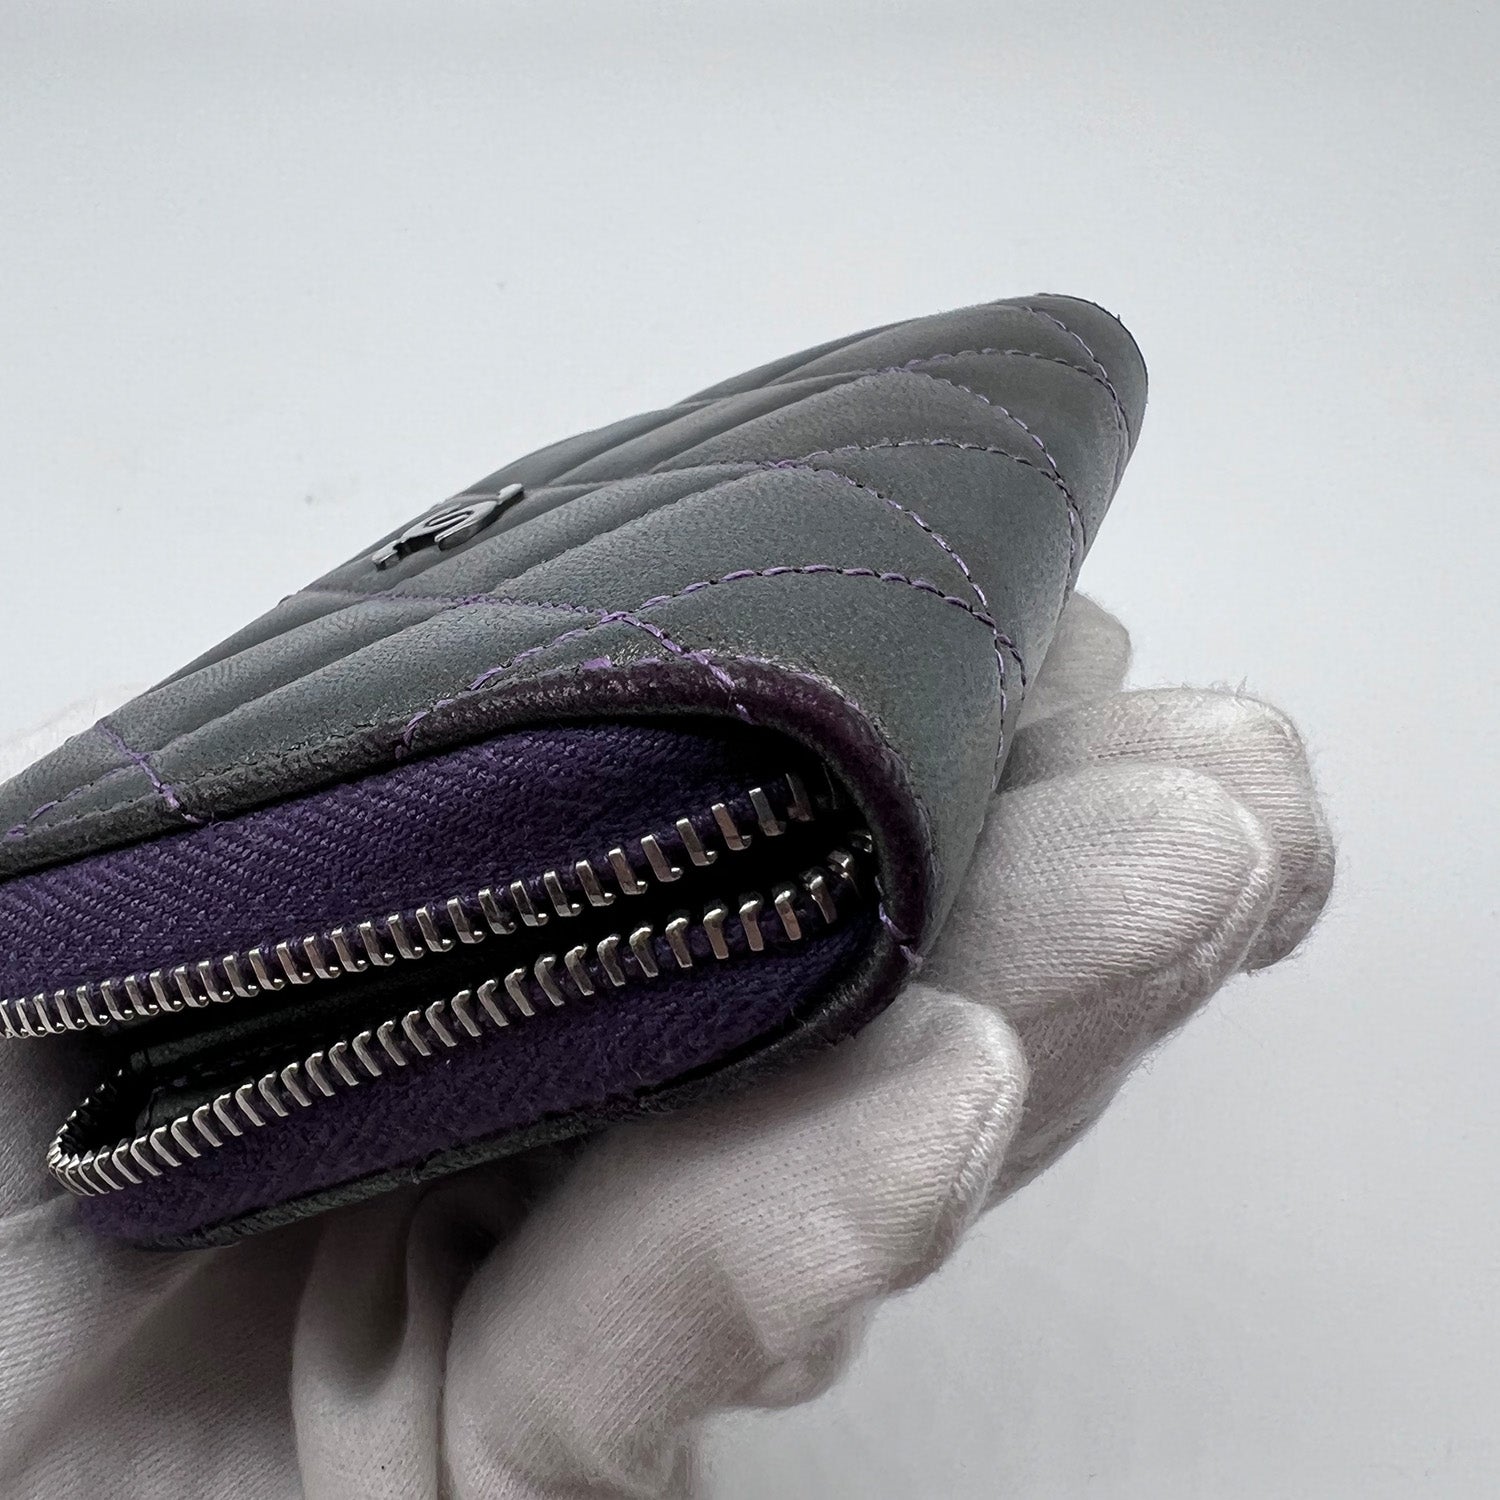 CHANEL Patent Quilted Brilliant Zip Around Wallet Purple 1173493